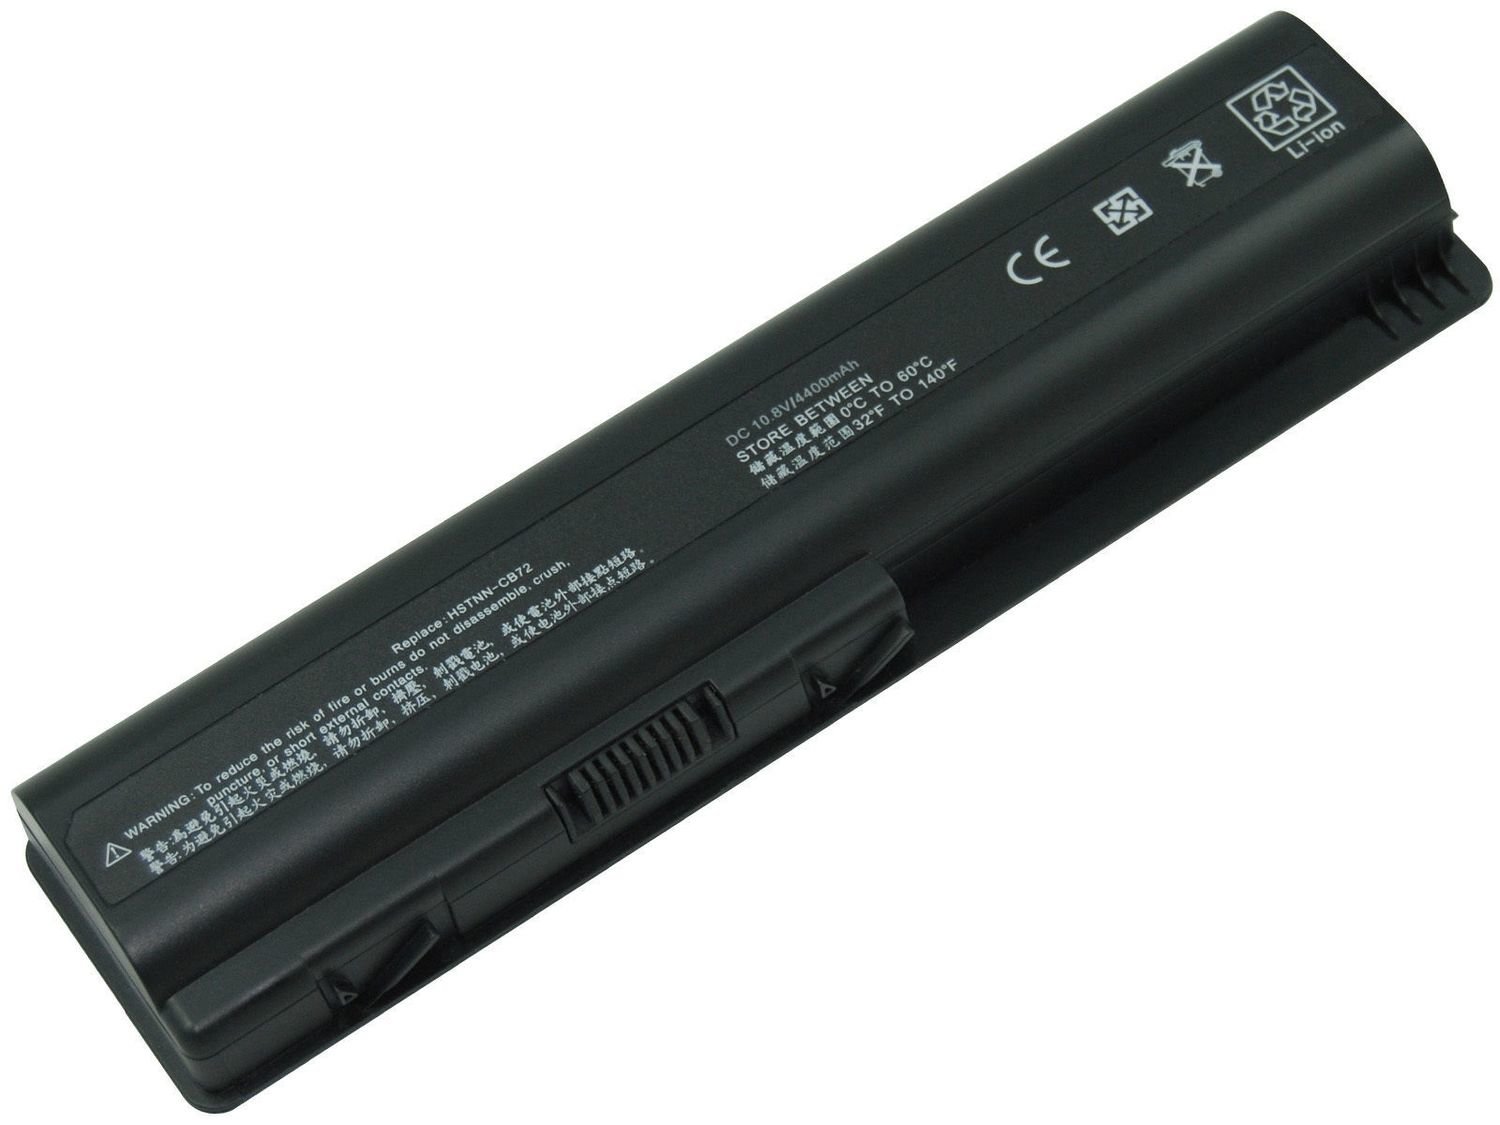 compatible for hp dv6500 dv6600 dv6700 Laptop battery